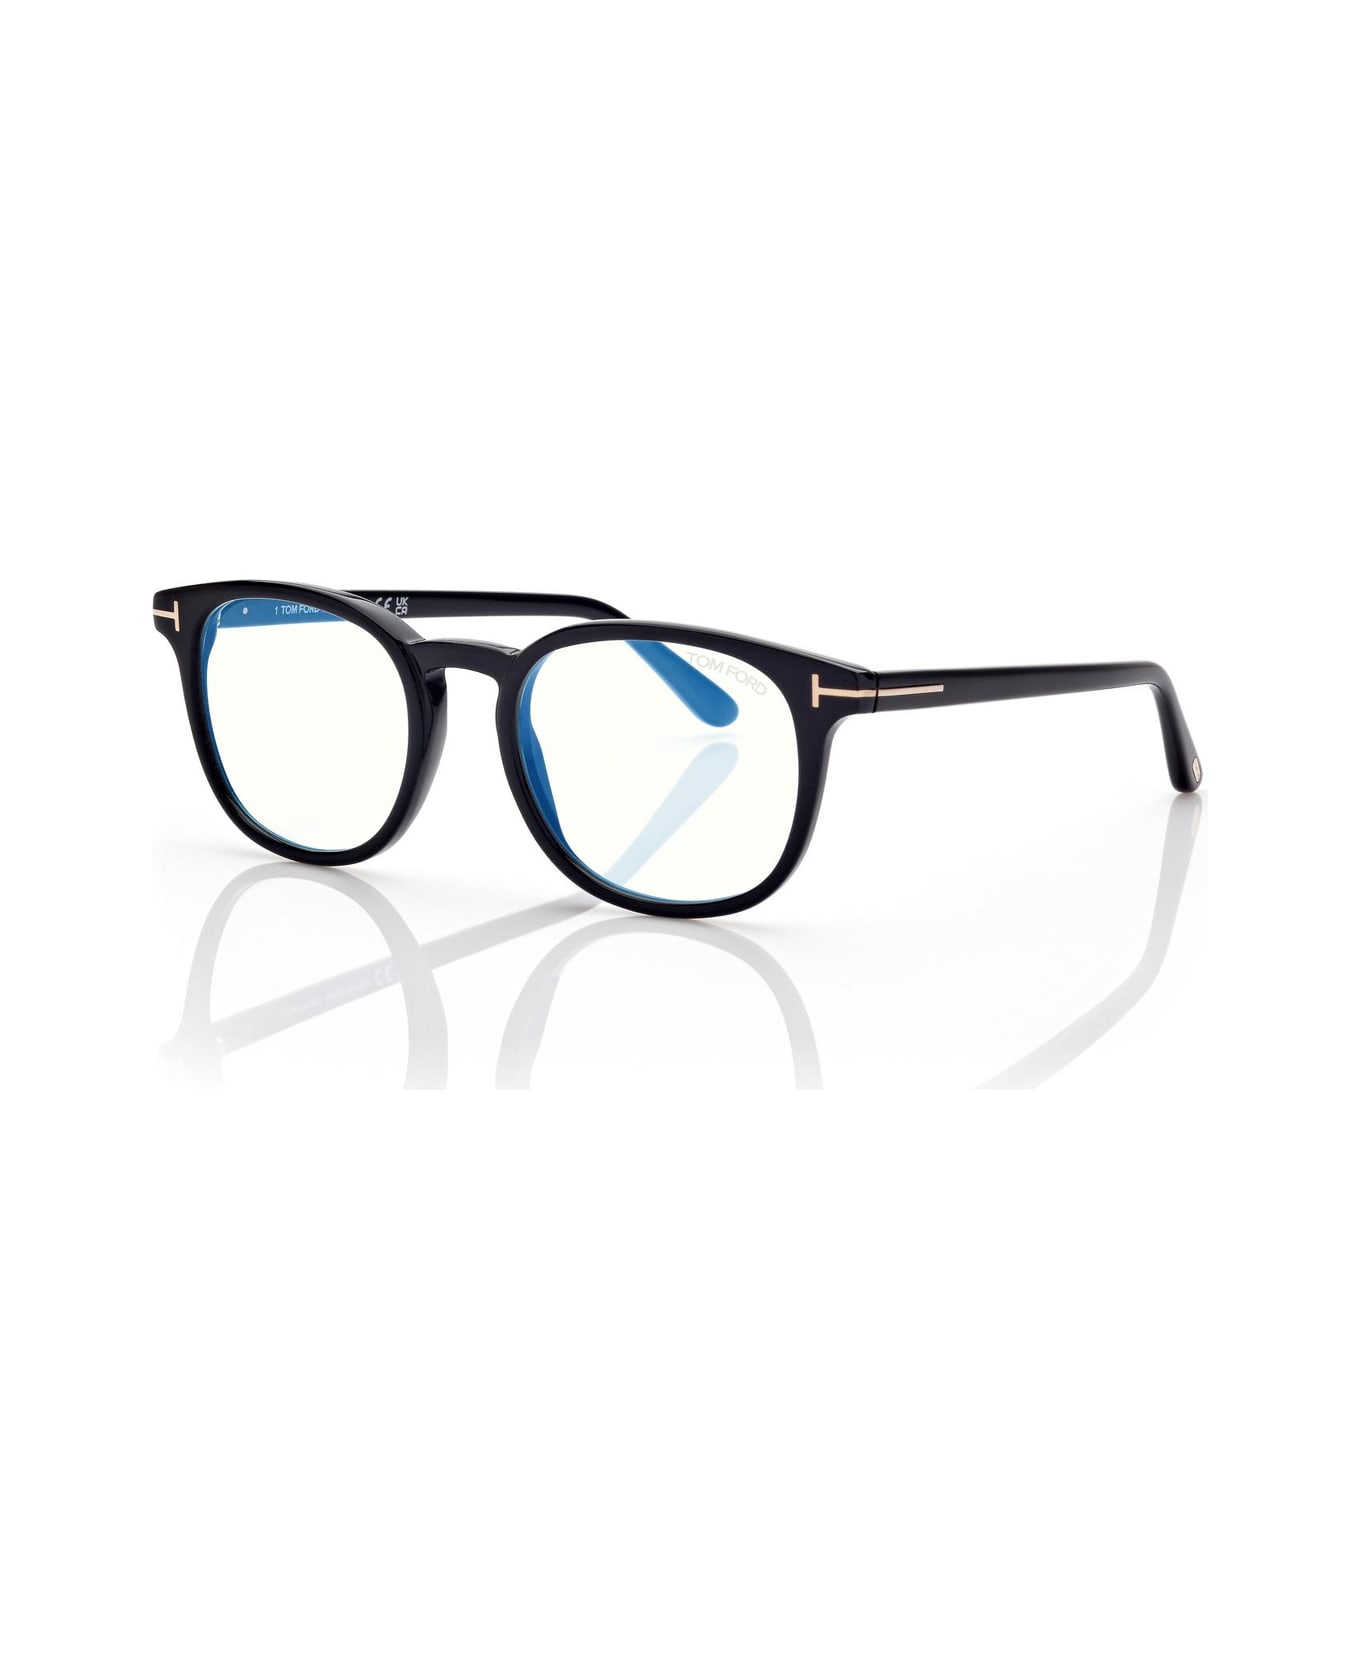 Tom Ford Eyewear Ft5819 Glasses - Nero アイウェア